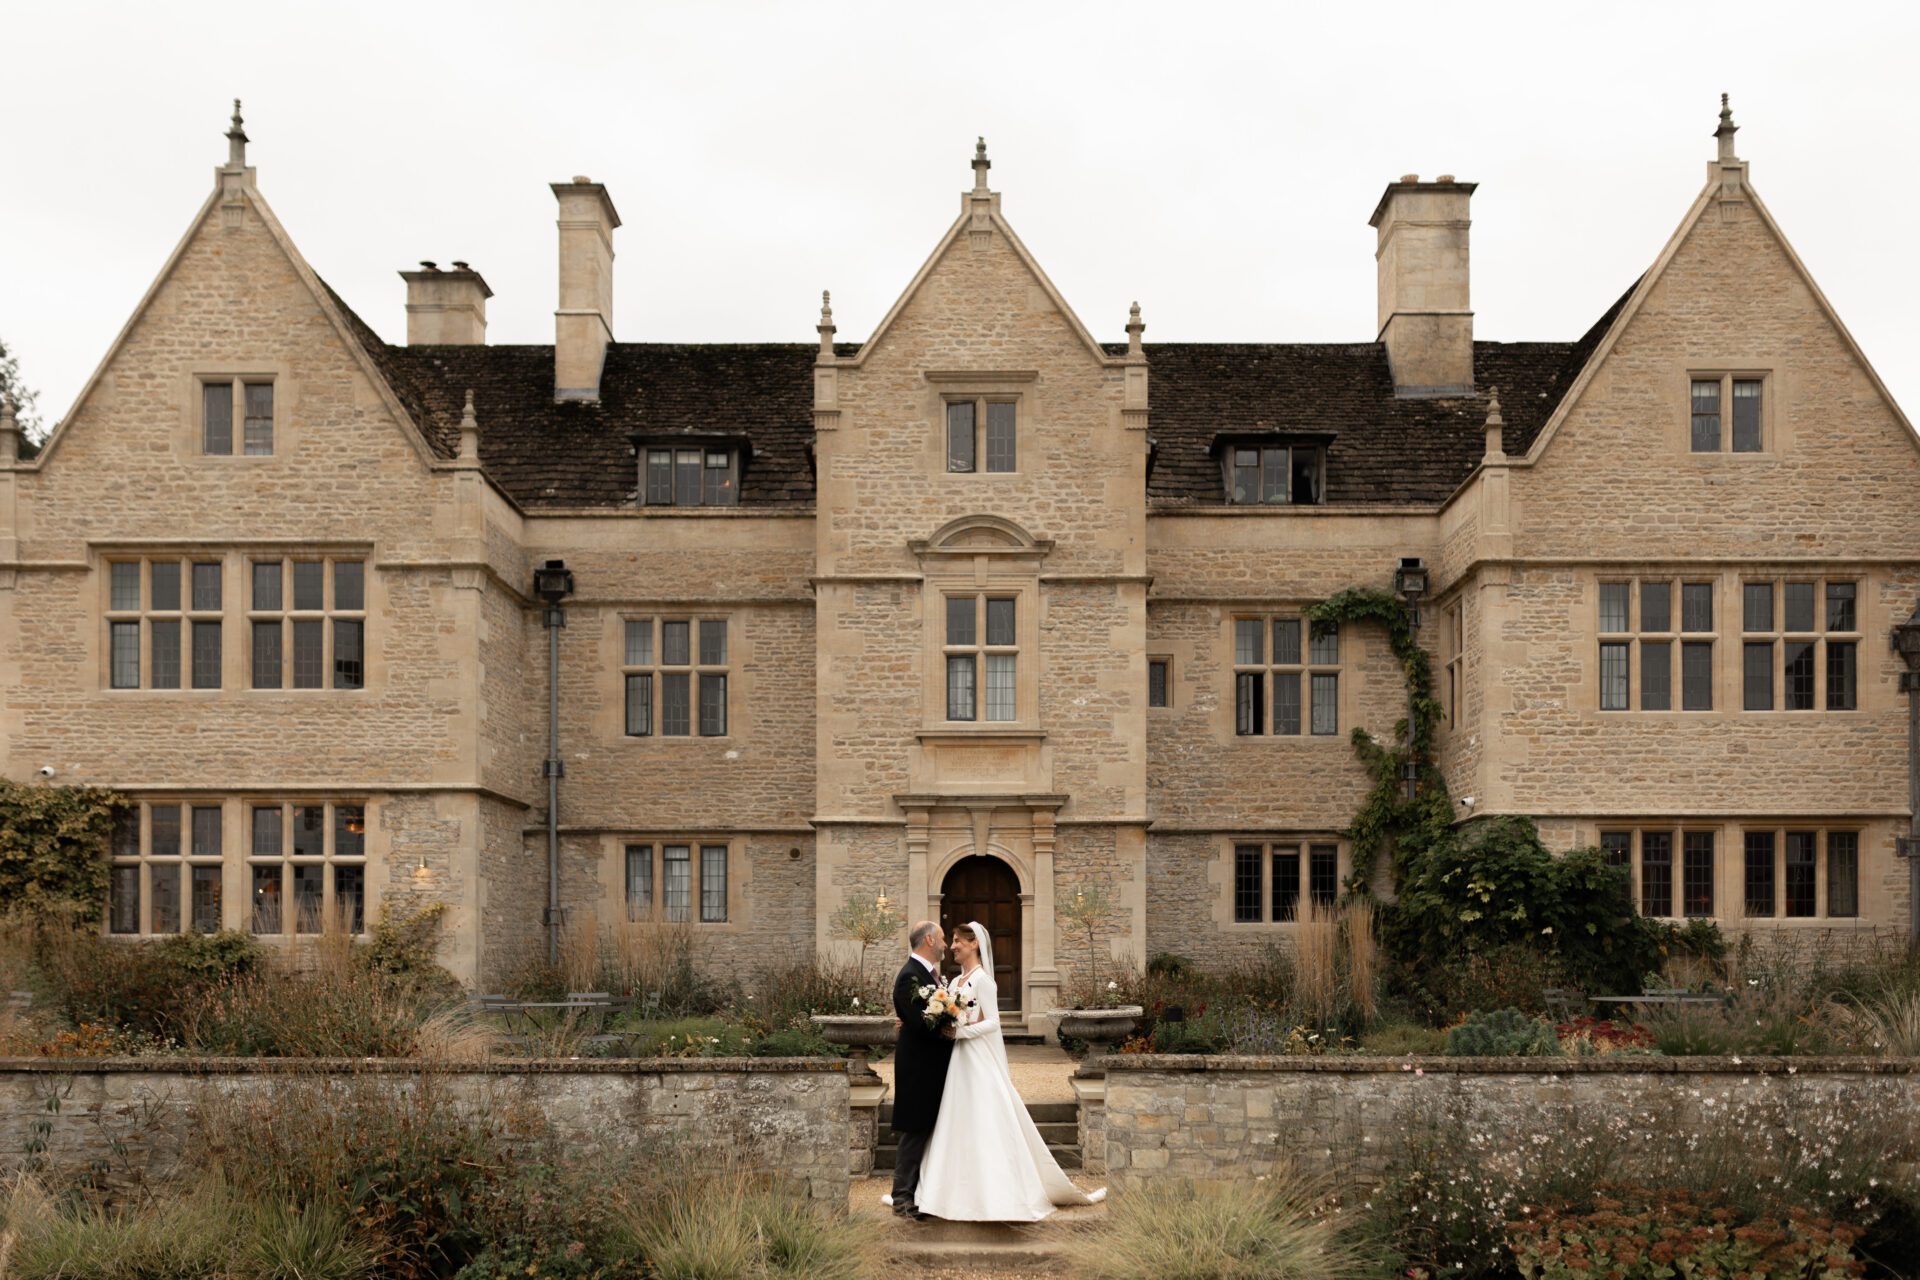 Editorial wedding photography at Kin House, Wiltshire wedding venue